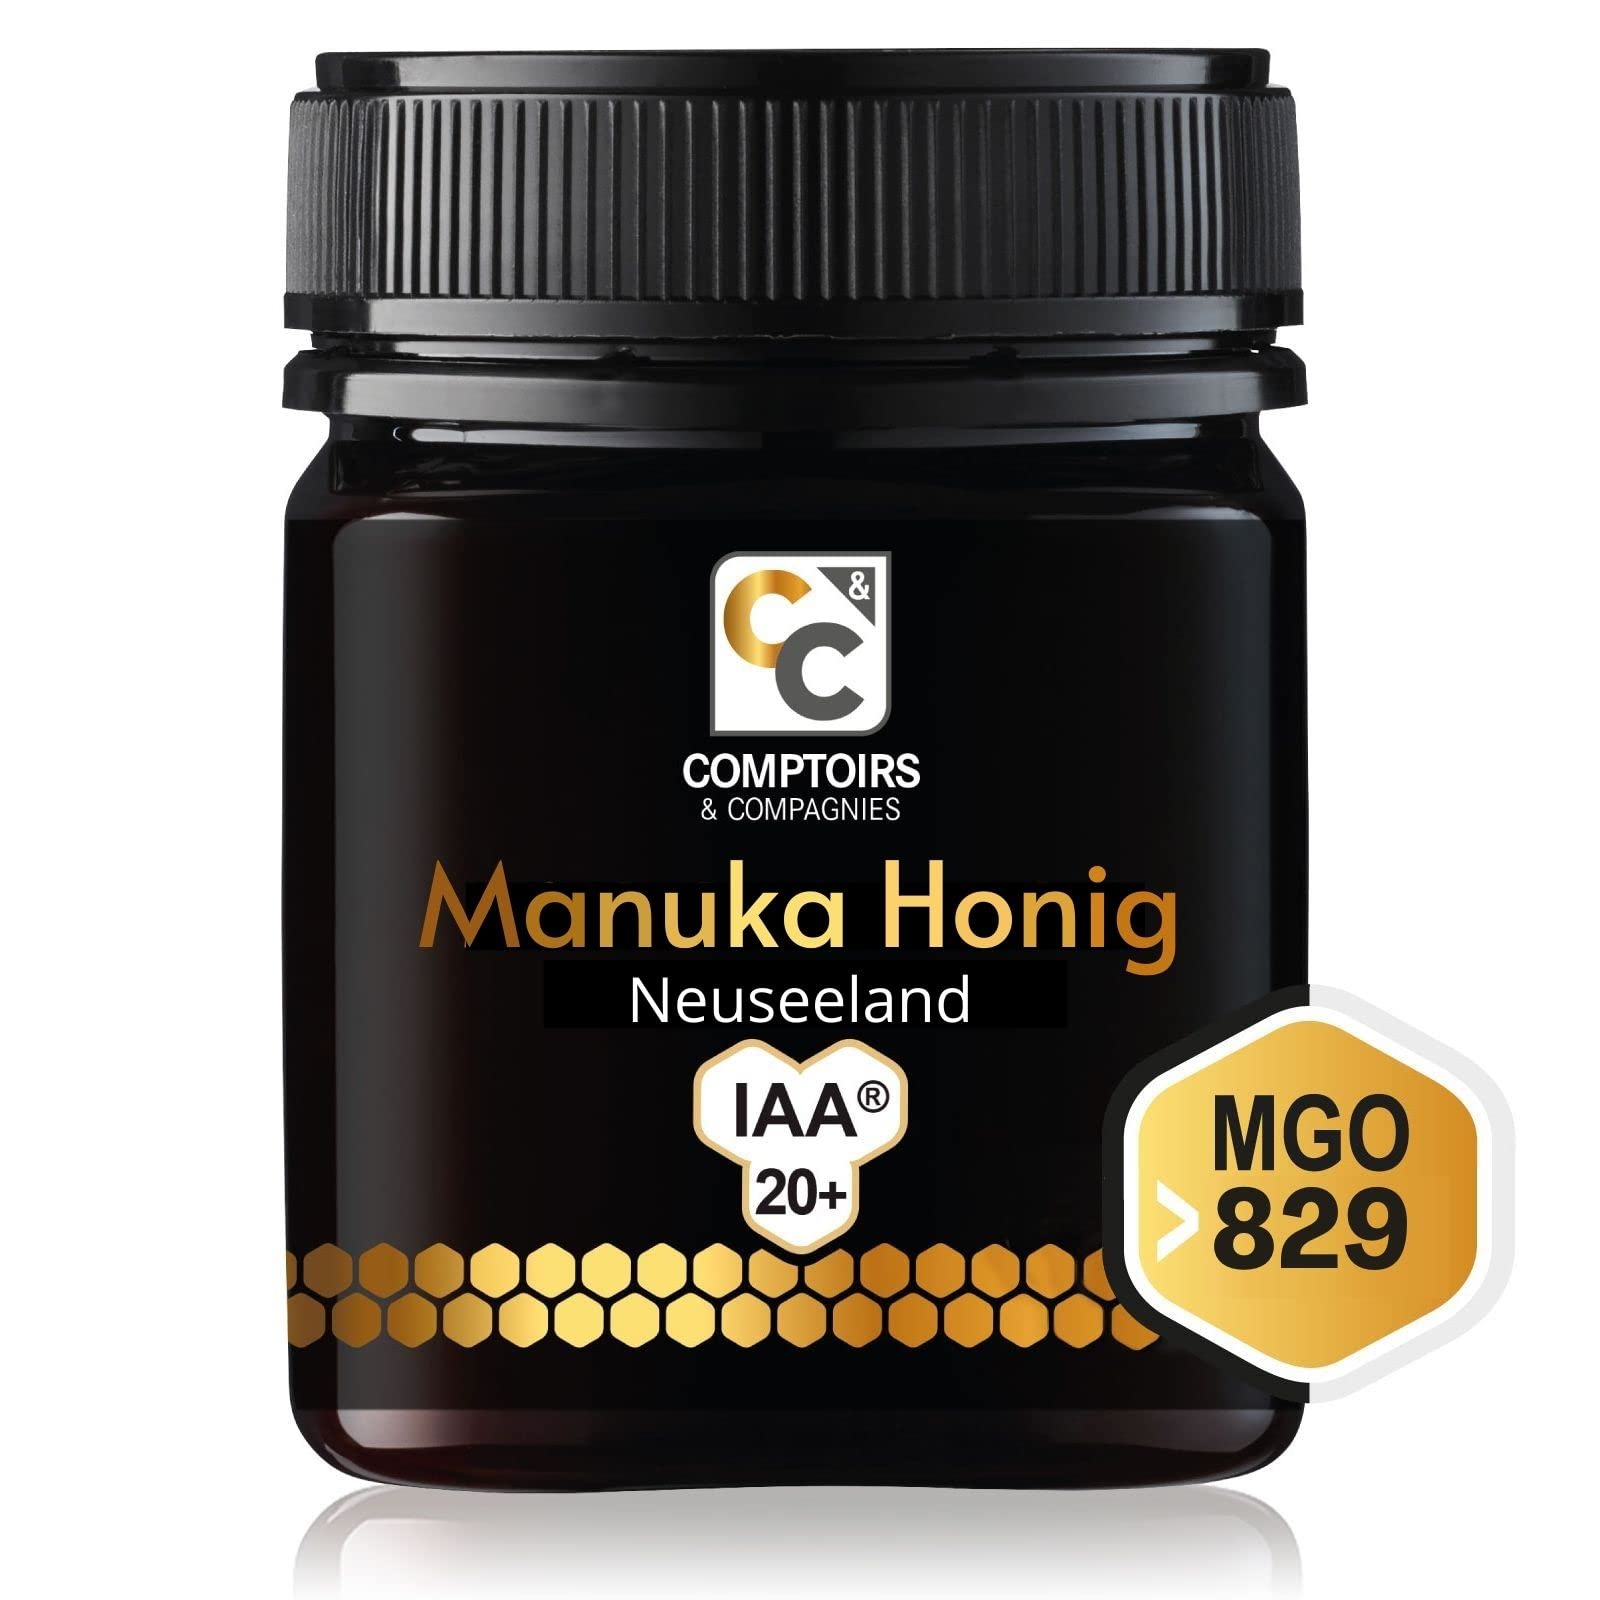 Comptoirs & Compagnies Manuka honing IAA®20+ (MGO 829) 250g